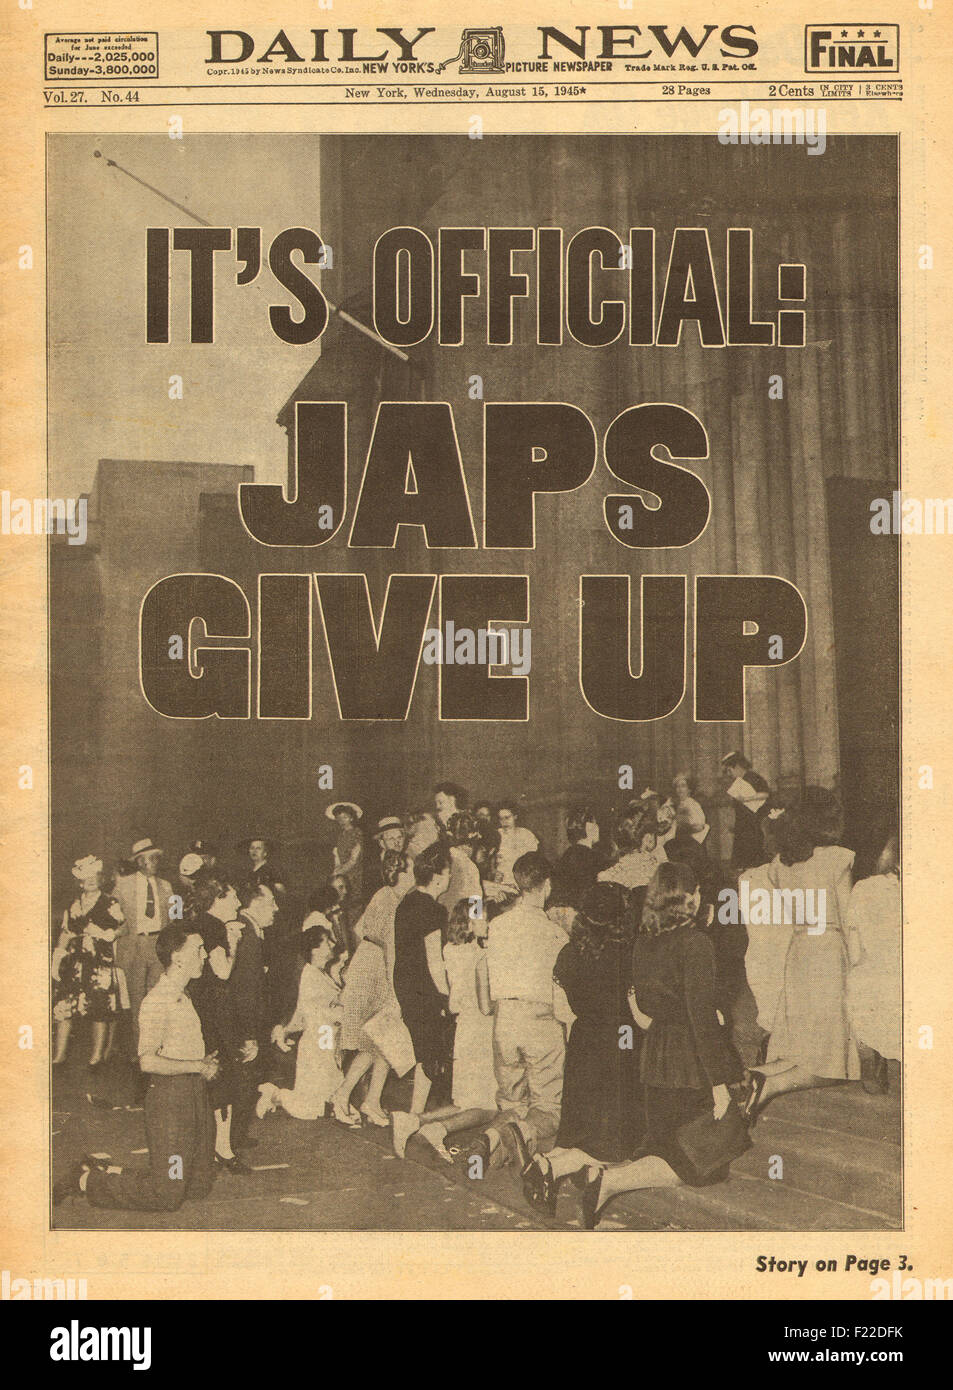 John Lennon & Yoko Ono's WAR IS OVER! banner in Greenwic…